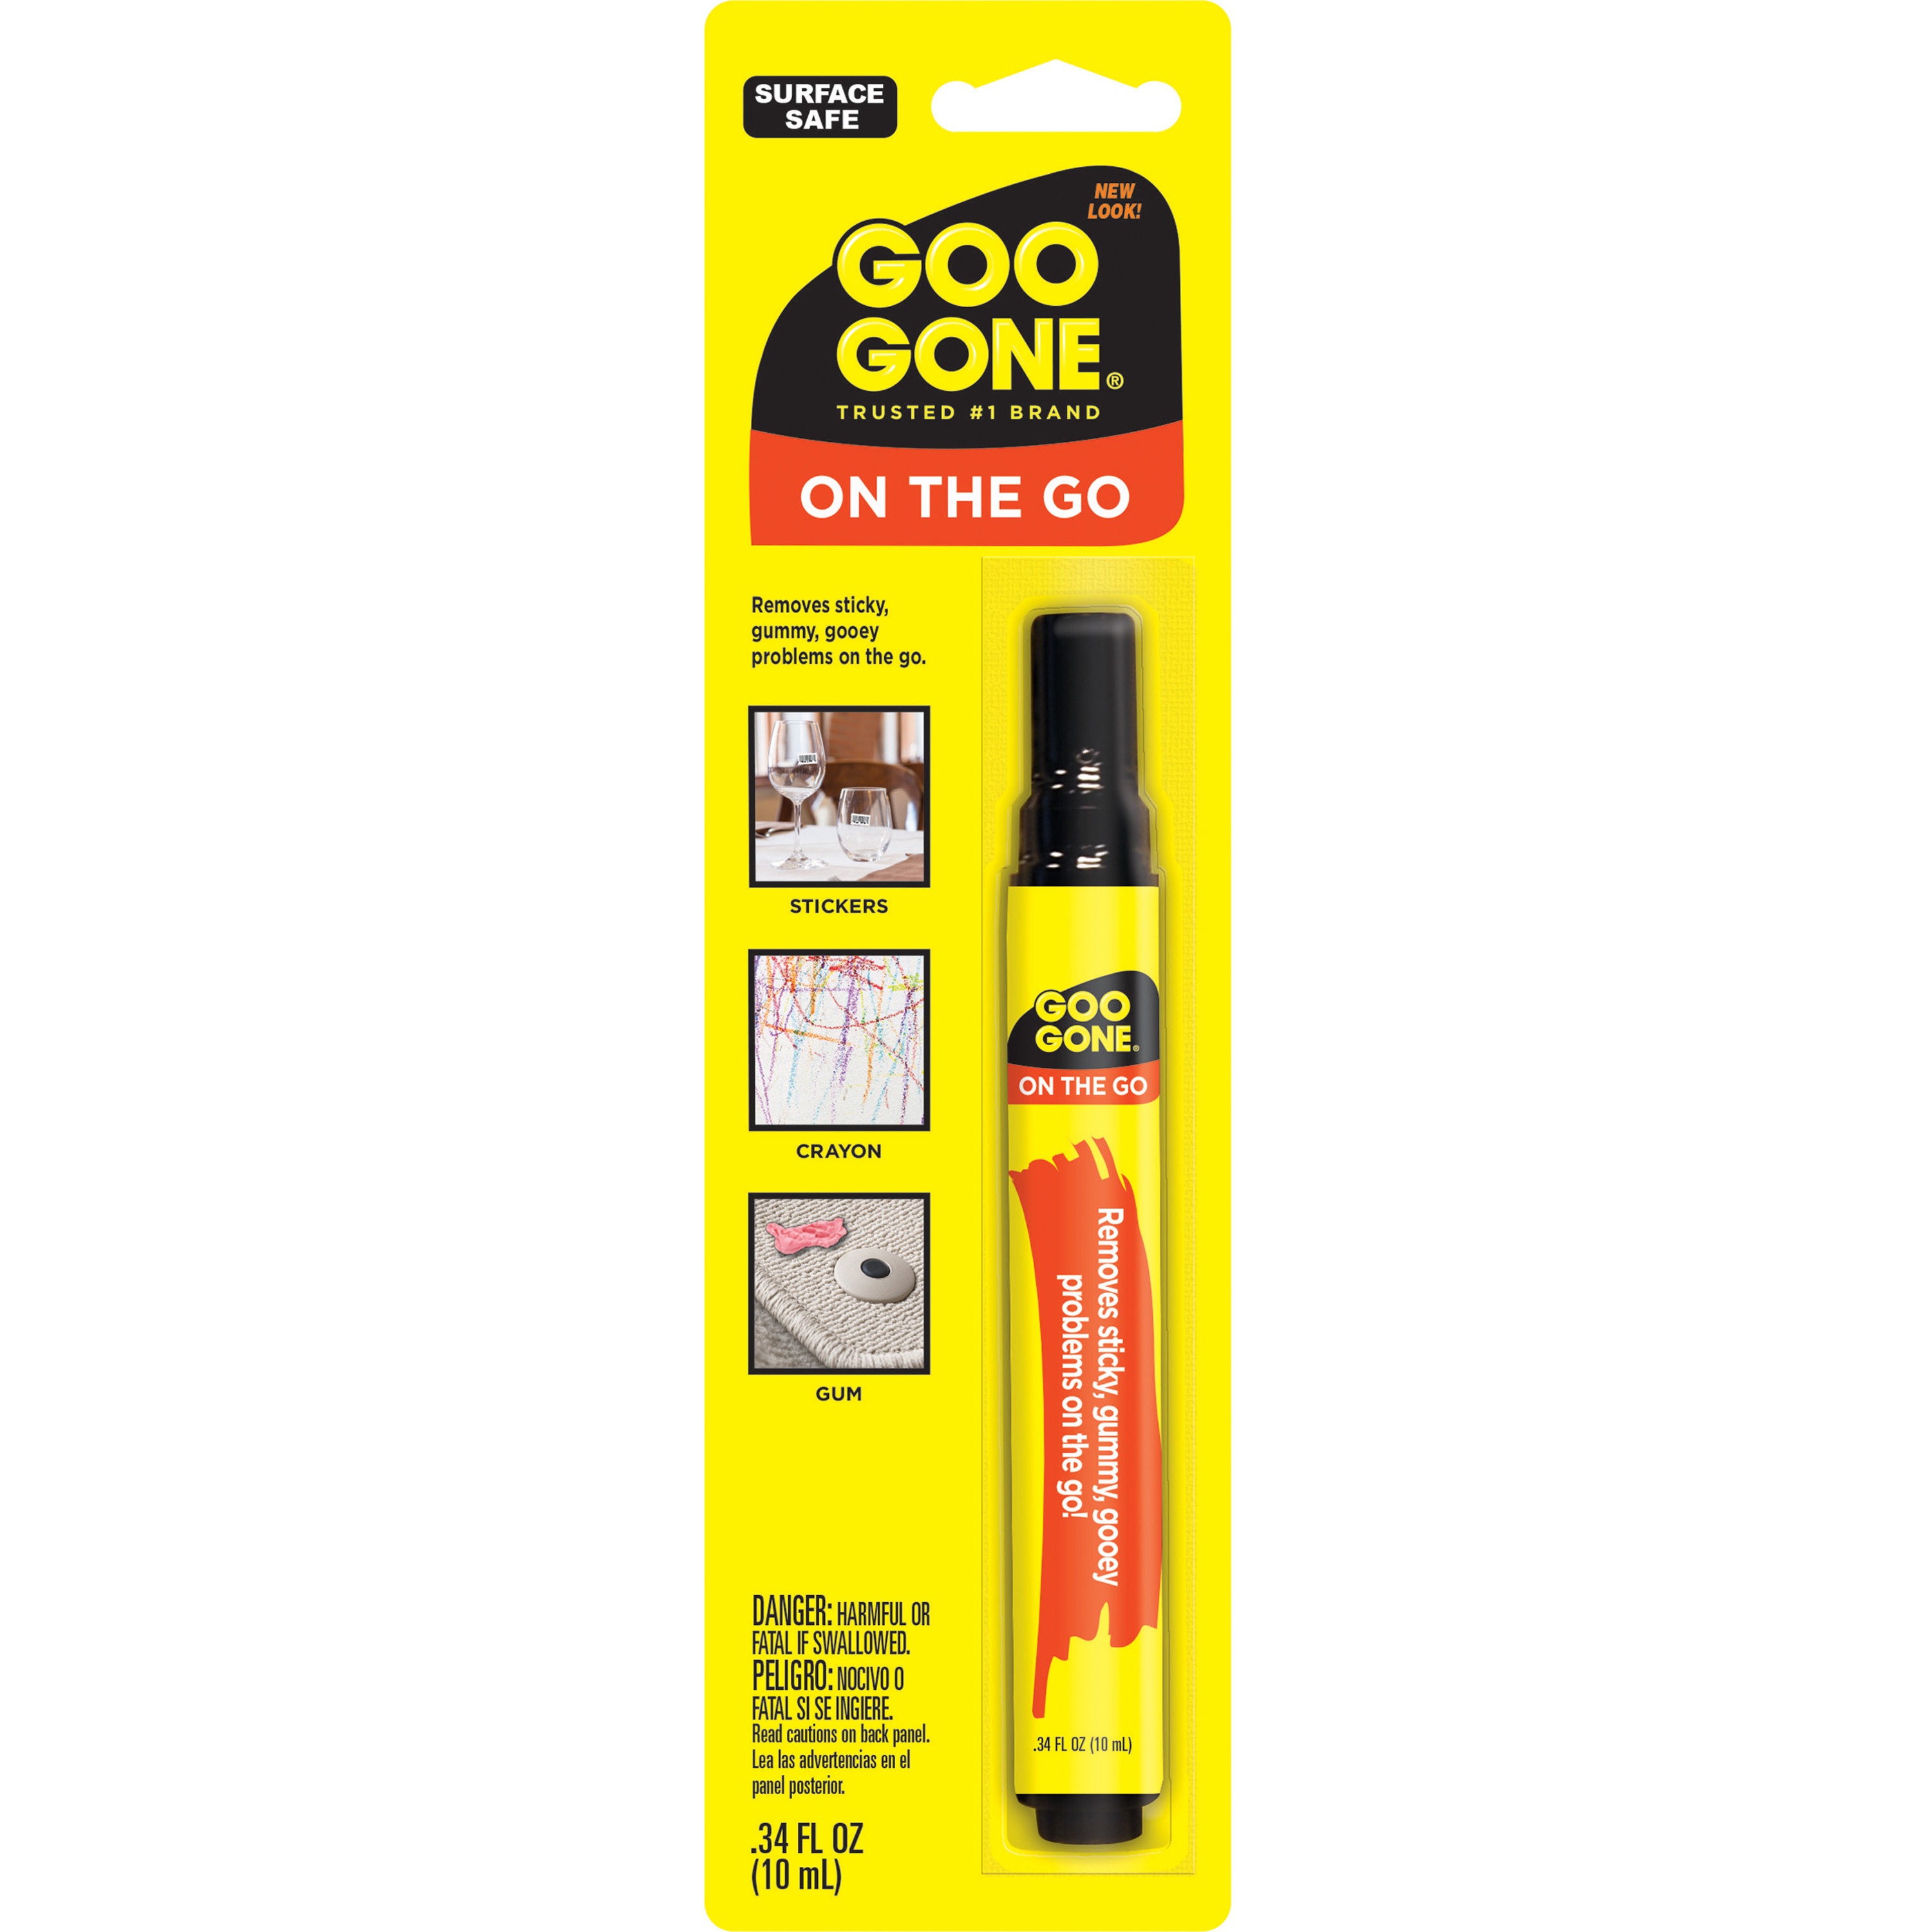 Goo Gone On The Go Pen, 0.34 Fl. Oz., Clear : $2.98 or 16 oz Pro-Power Goo & Adhesive Remover Pump Spray $4.97 at Walmart